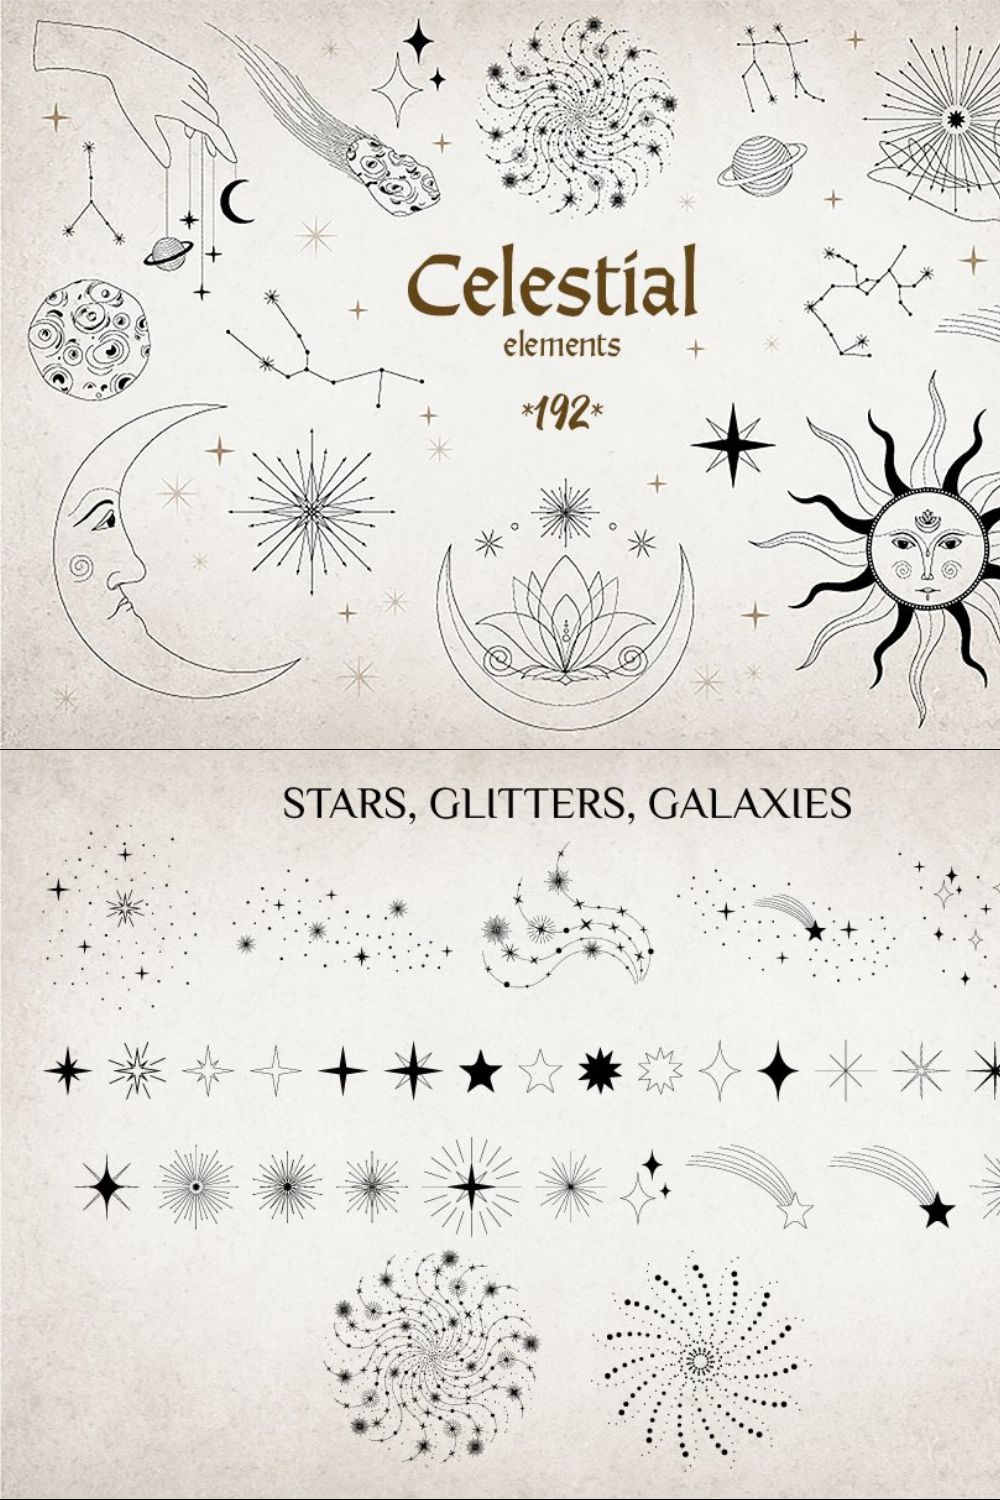 Celestial elements pinterest preview image.